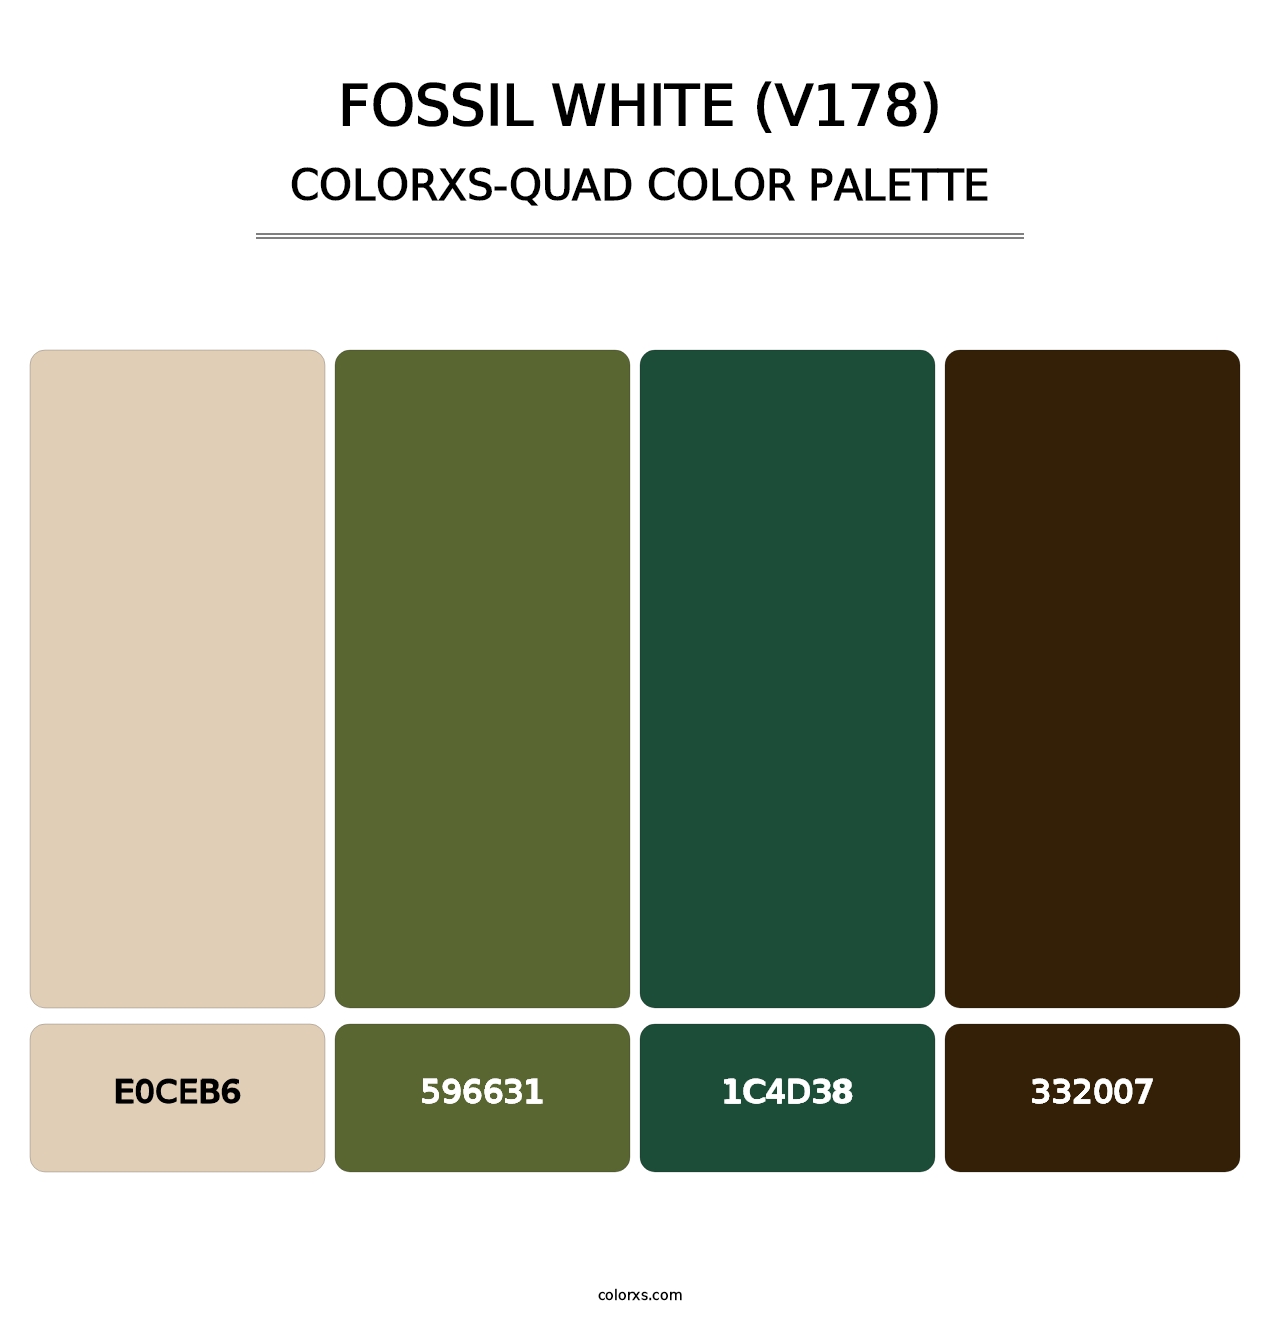 Fossil White (V178) - Colorxs Quad Palette